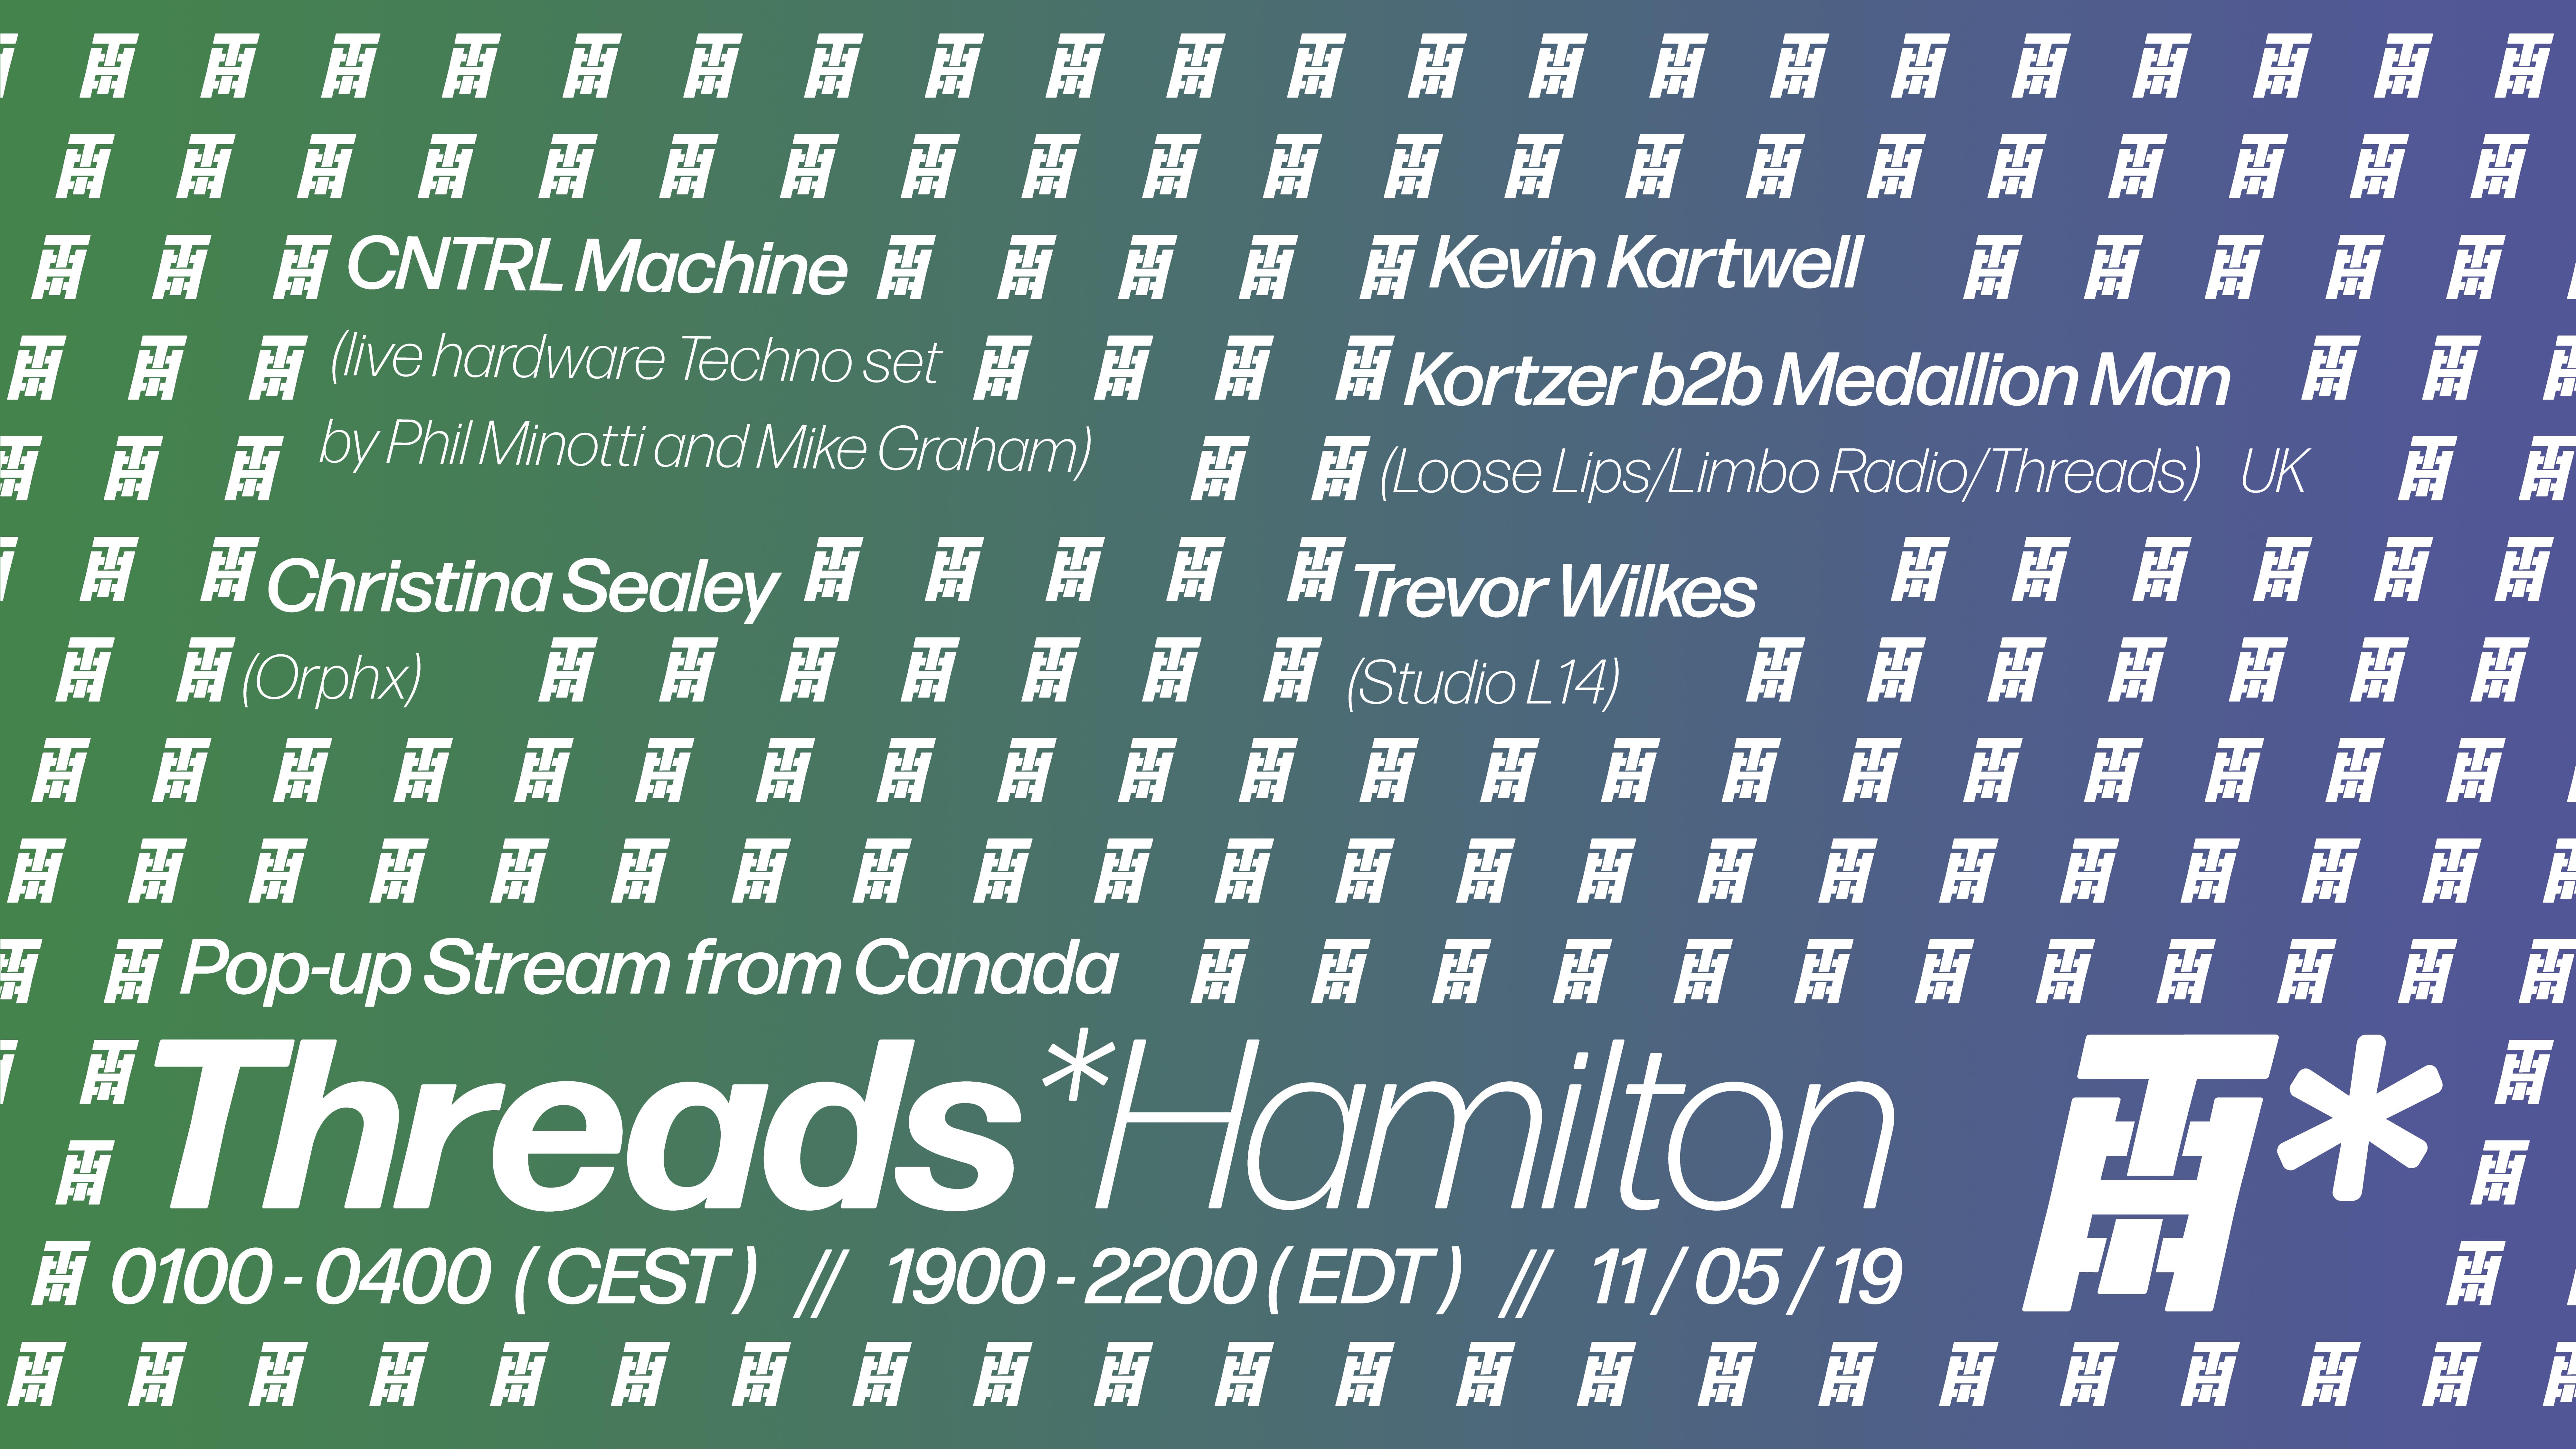 Threads*Hamilton (11/05/19)